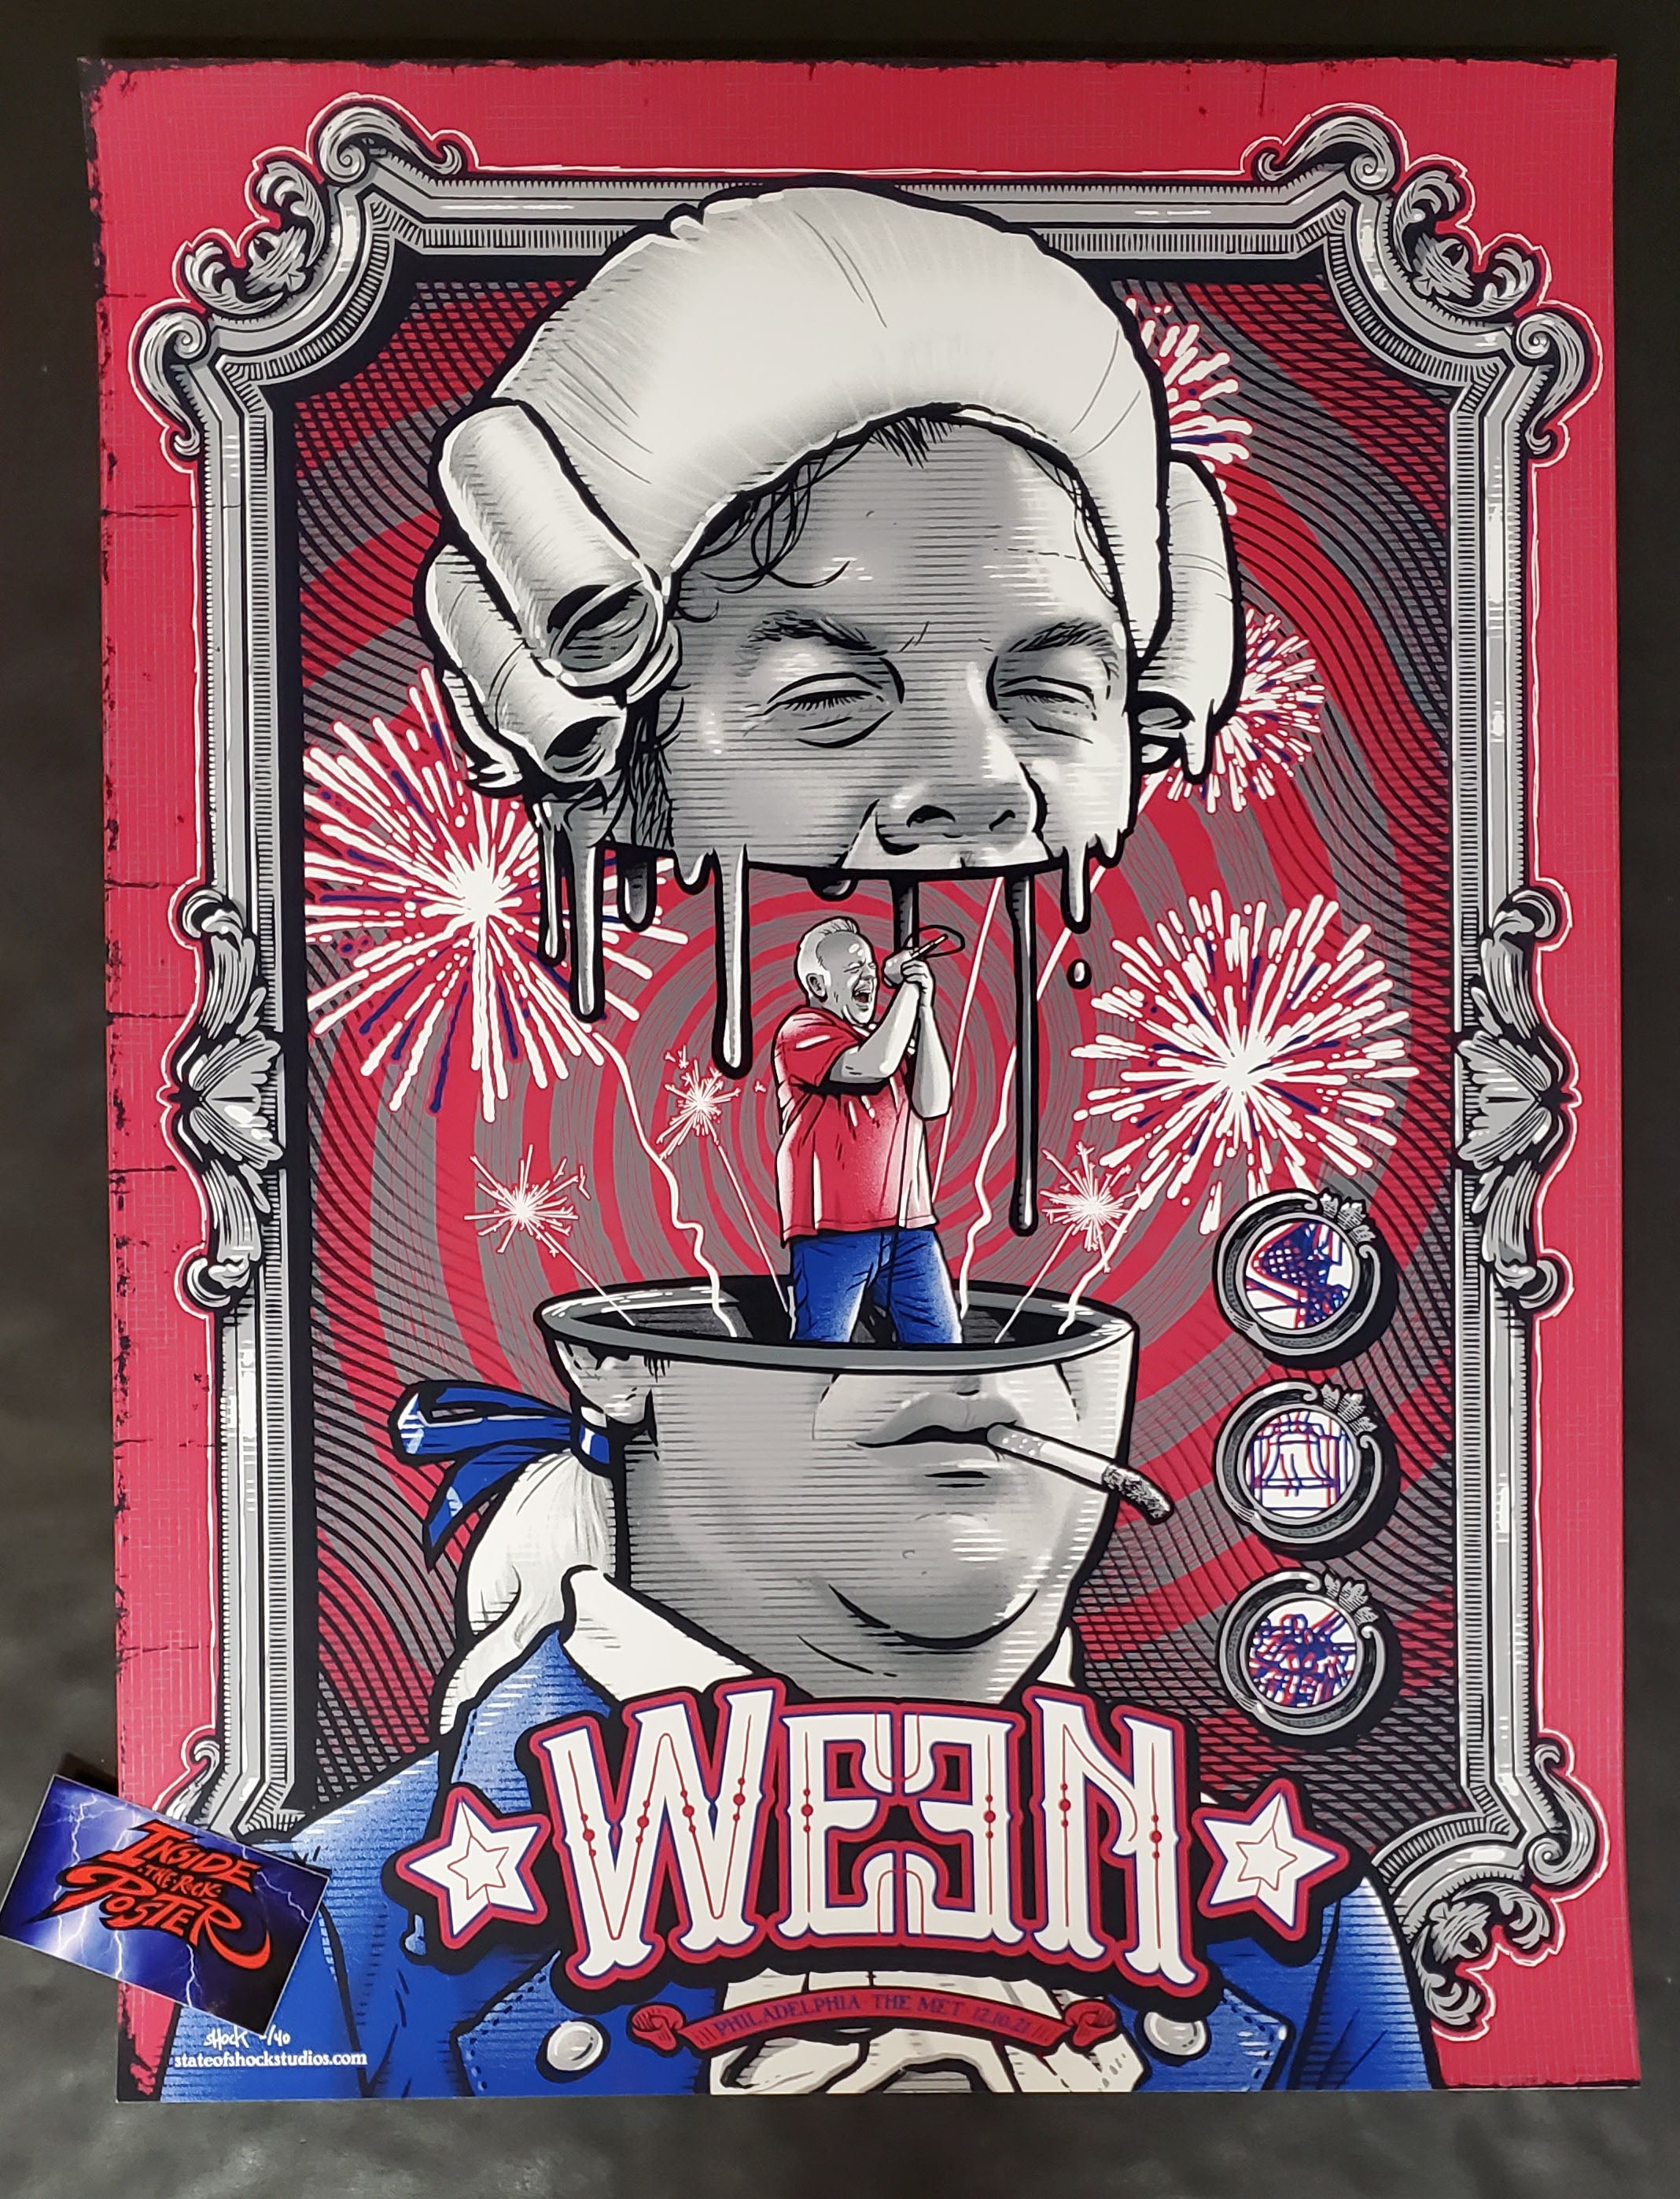 Darin Shock Ween Philadelphia Poster Artist Edition 2021 Inside the